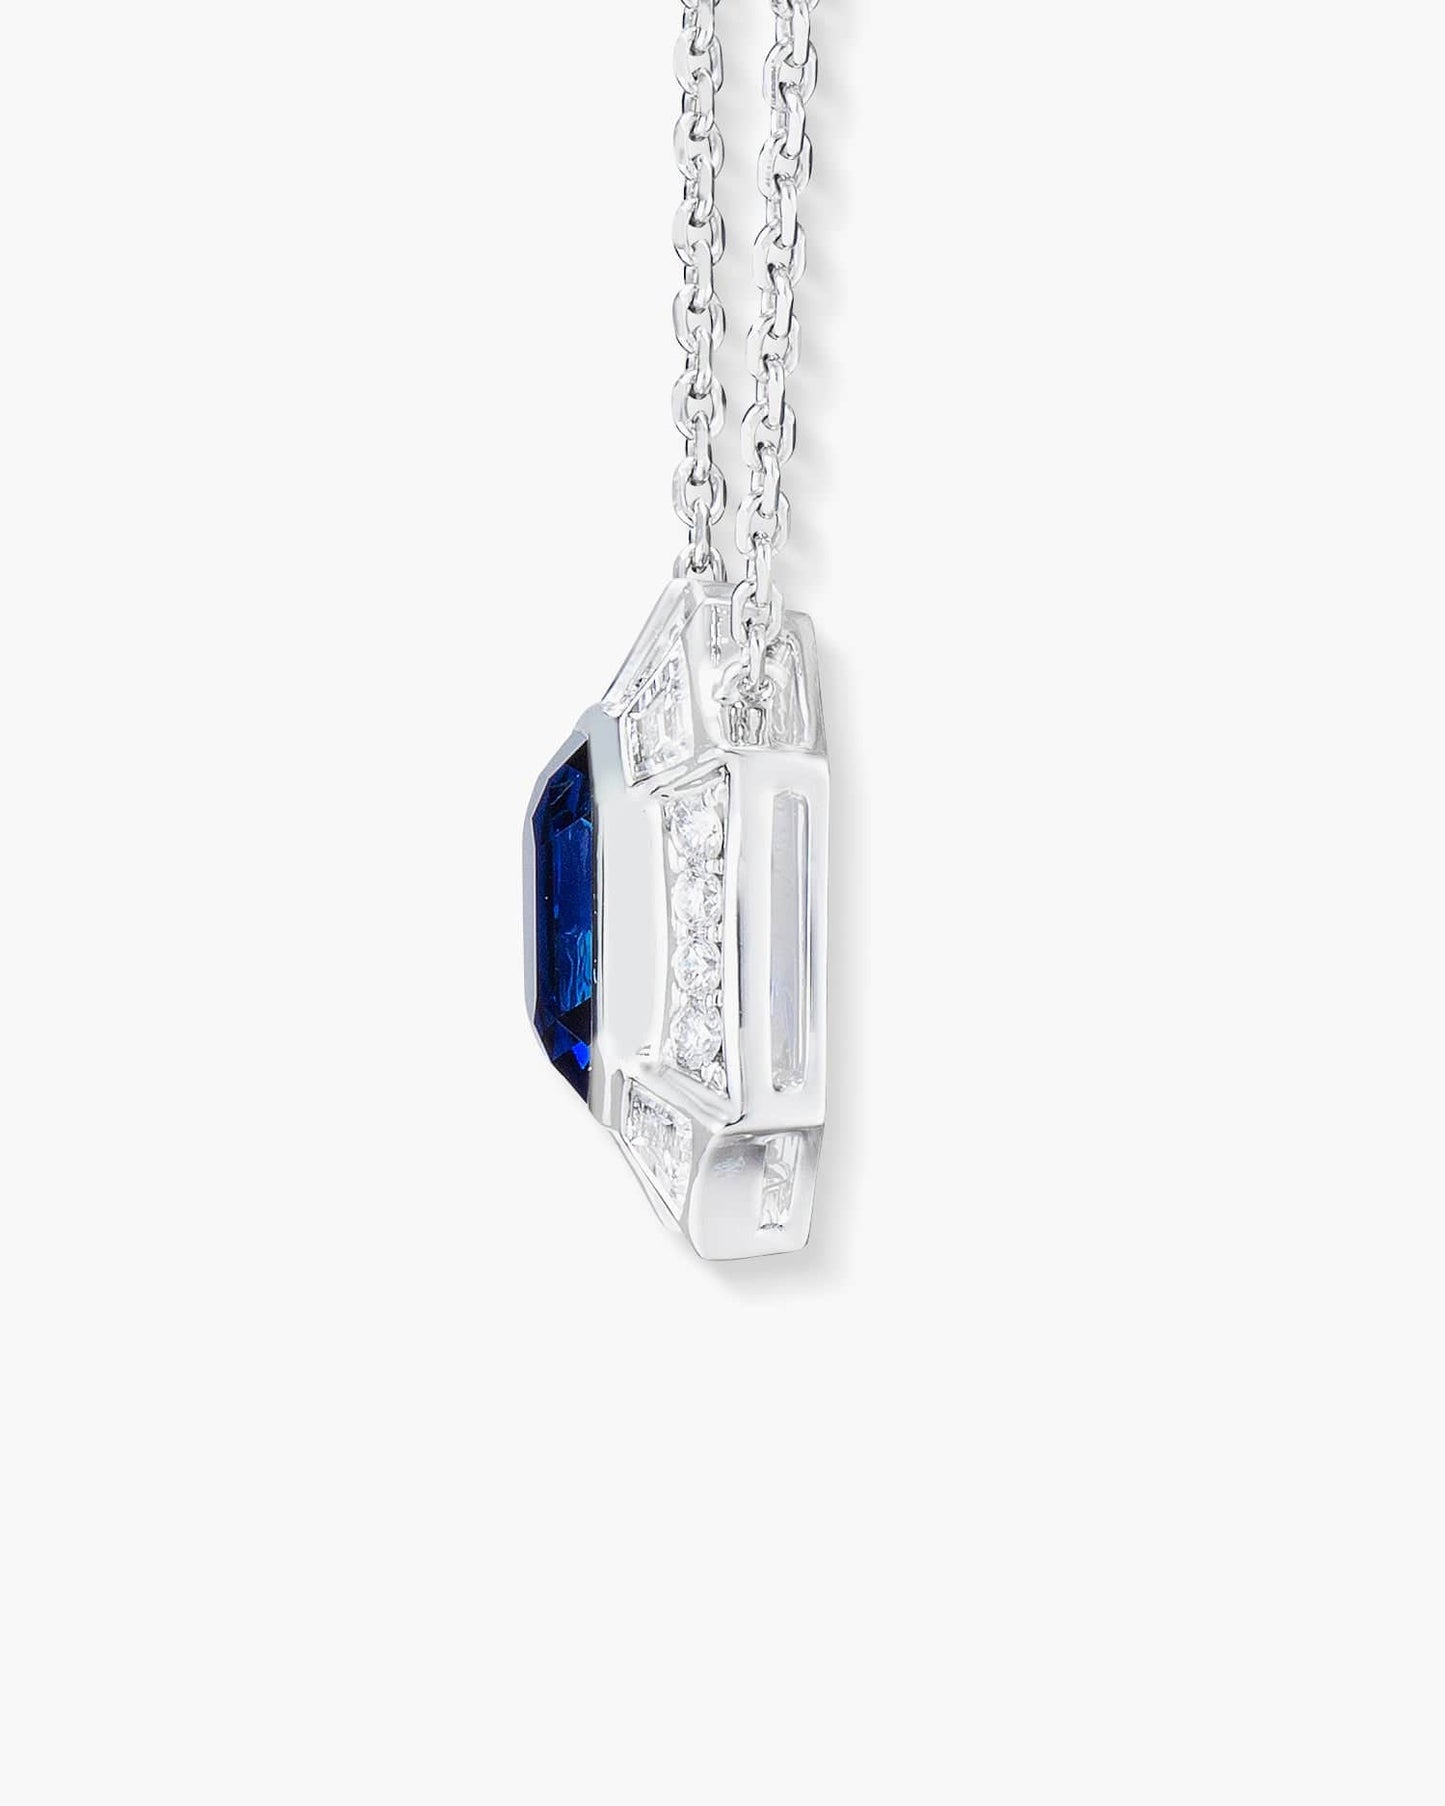 3.01 carat Emerald Cut Ceylon Sapphire and Diamond Pendant Necklace